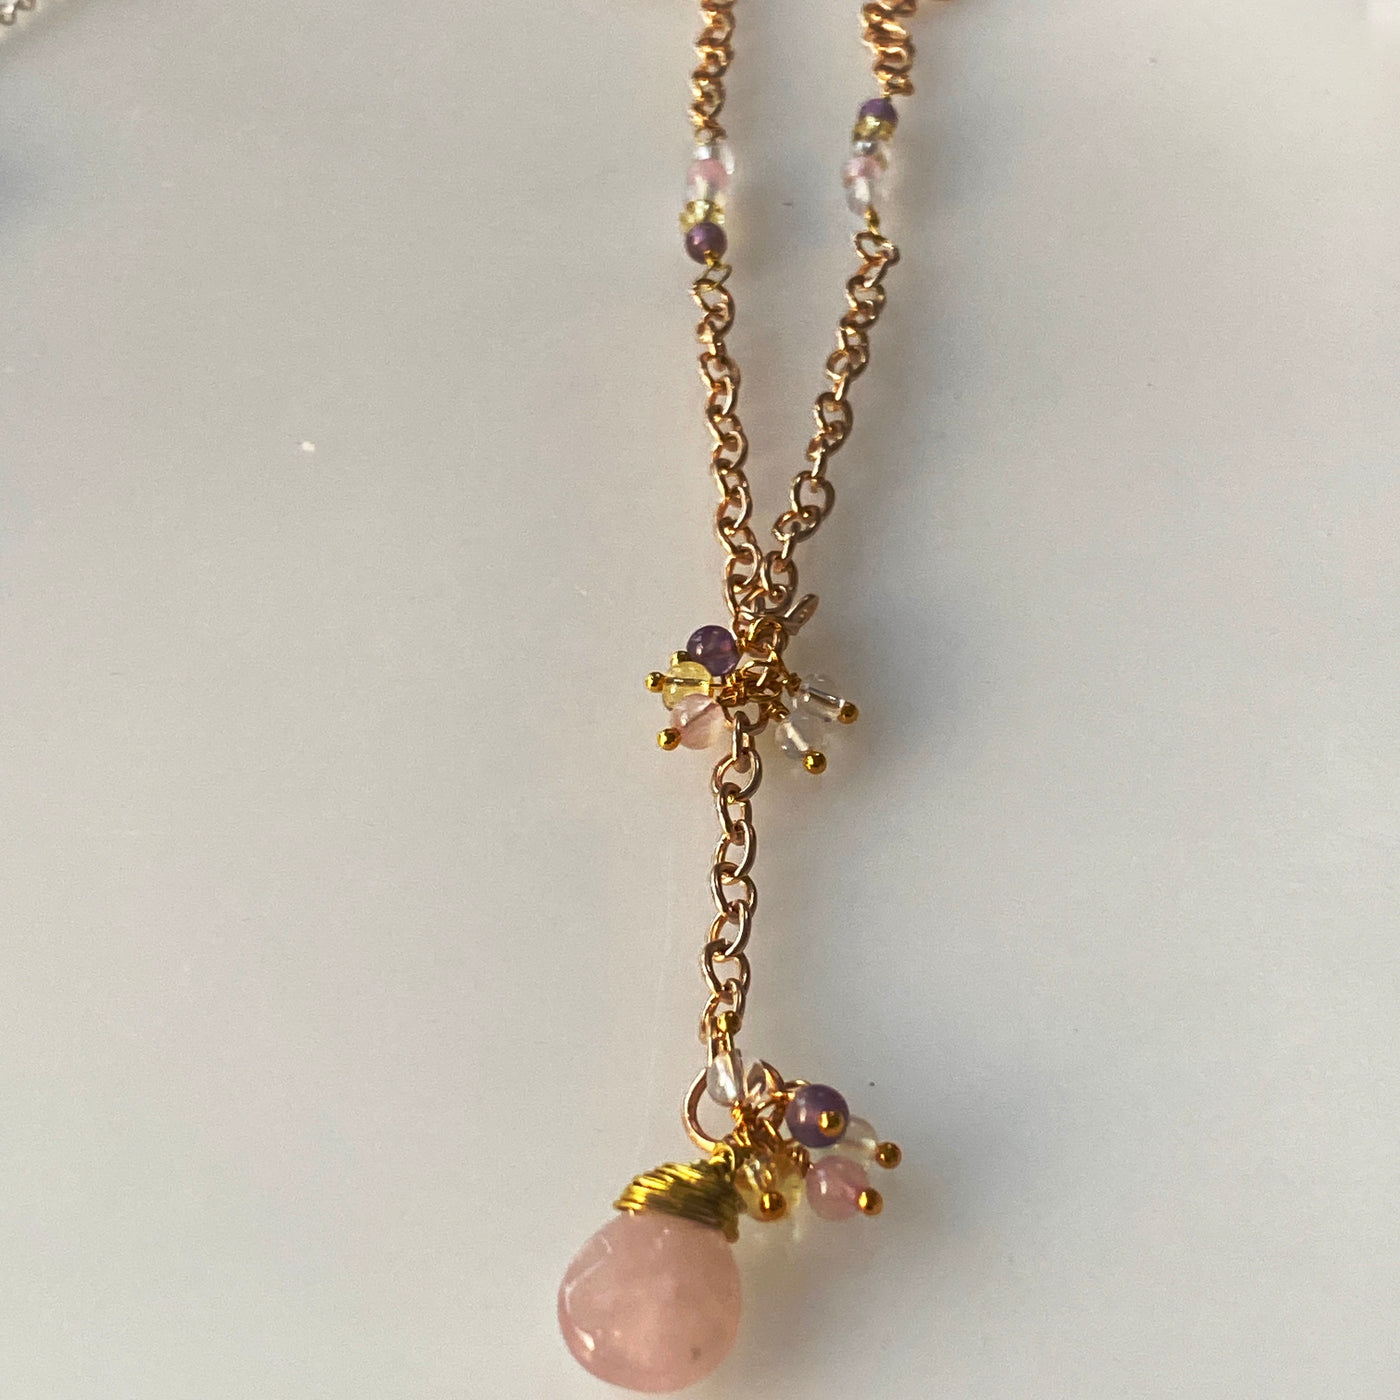 Necklace: Cherry blossom rose quartz, citrina amethyst, opalyte and white quartz in copper wire